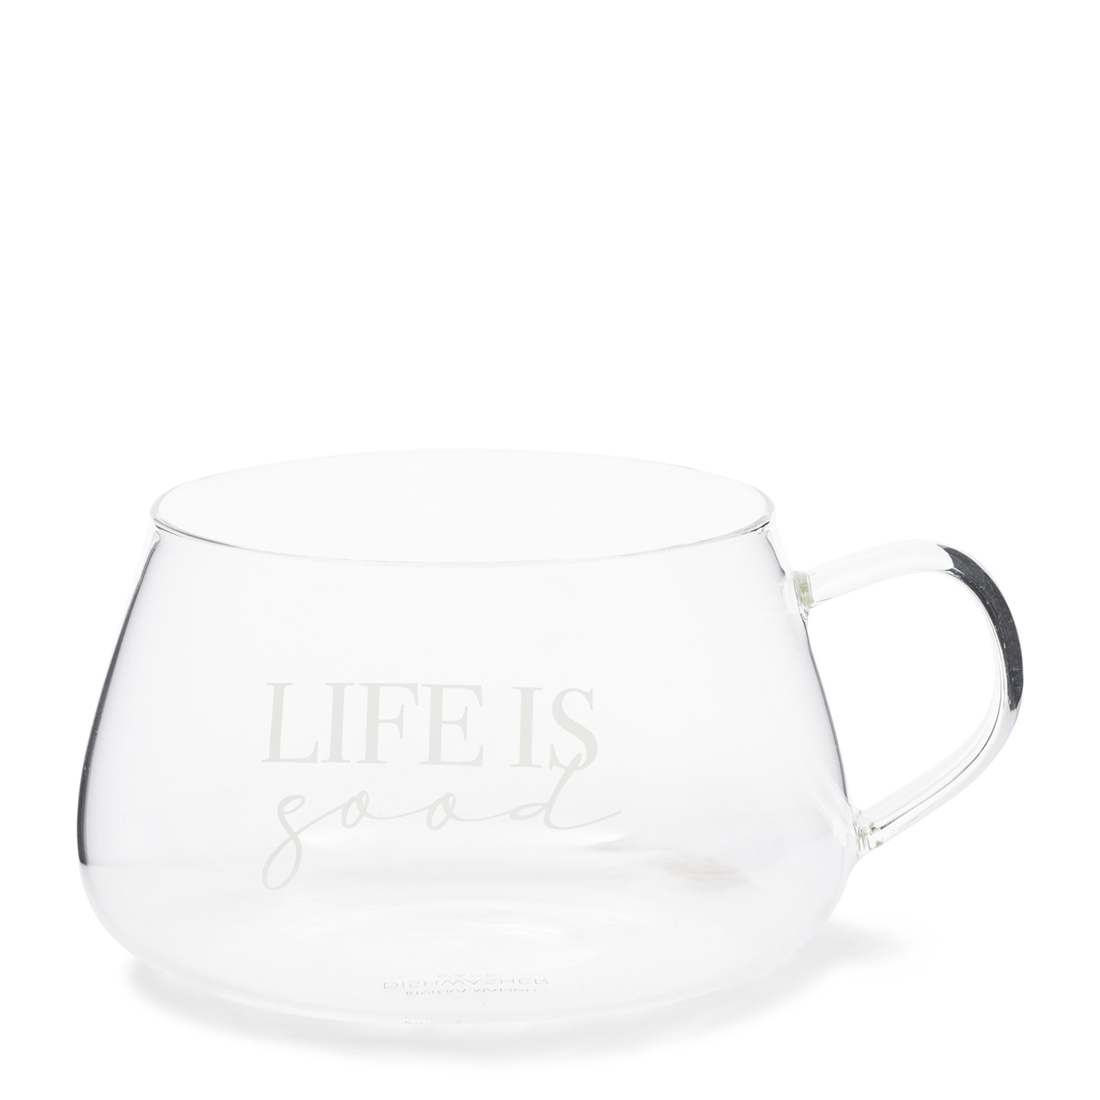 Riviera Maison Theemok, Dubbelwandig glas, mok met tekst - RM Life Is Good Tea Glass 618 ml